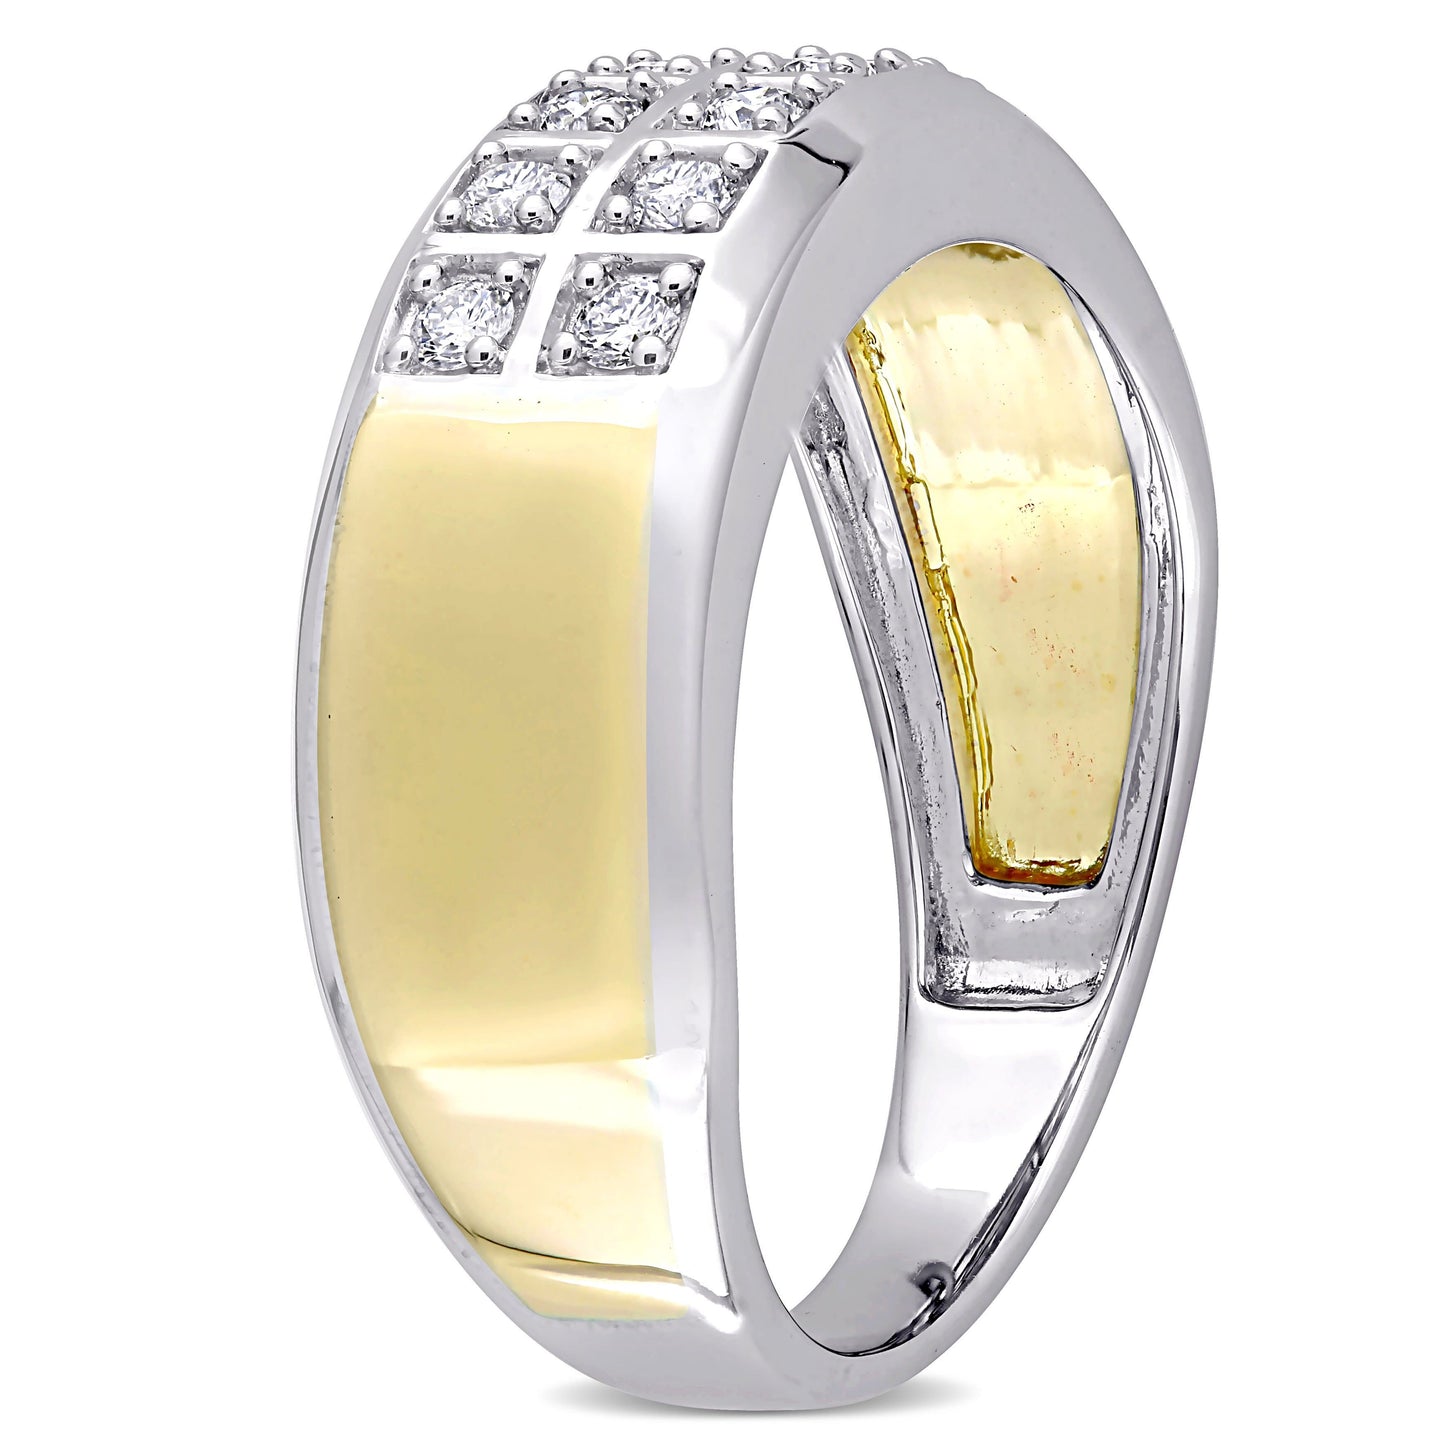 1/3ct Diamond Ring in 10k White & Yellow Gold